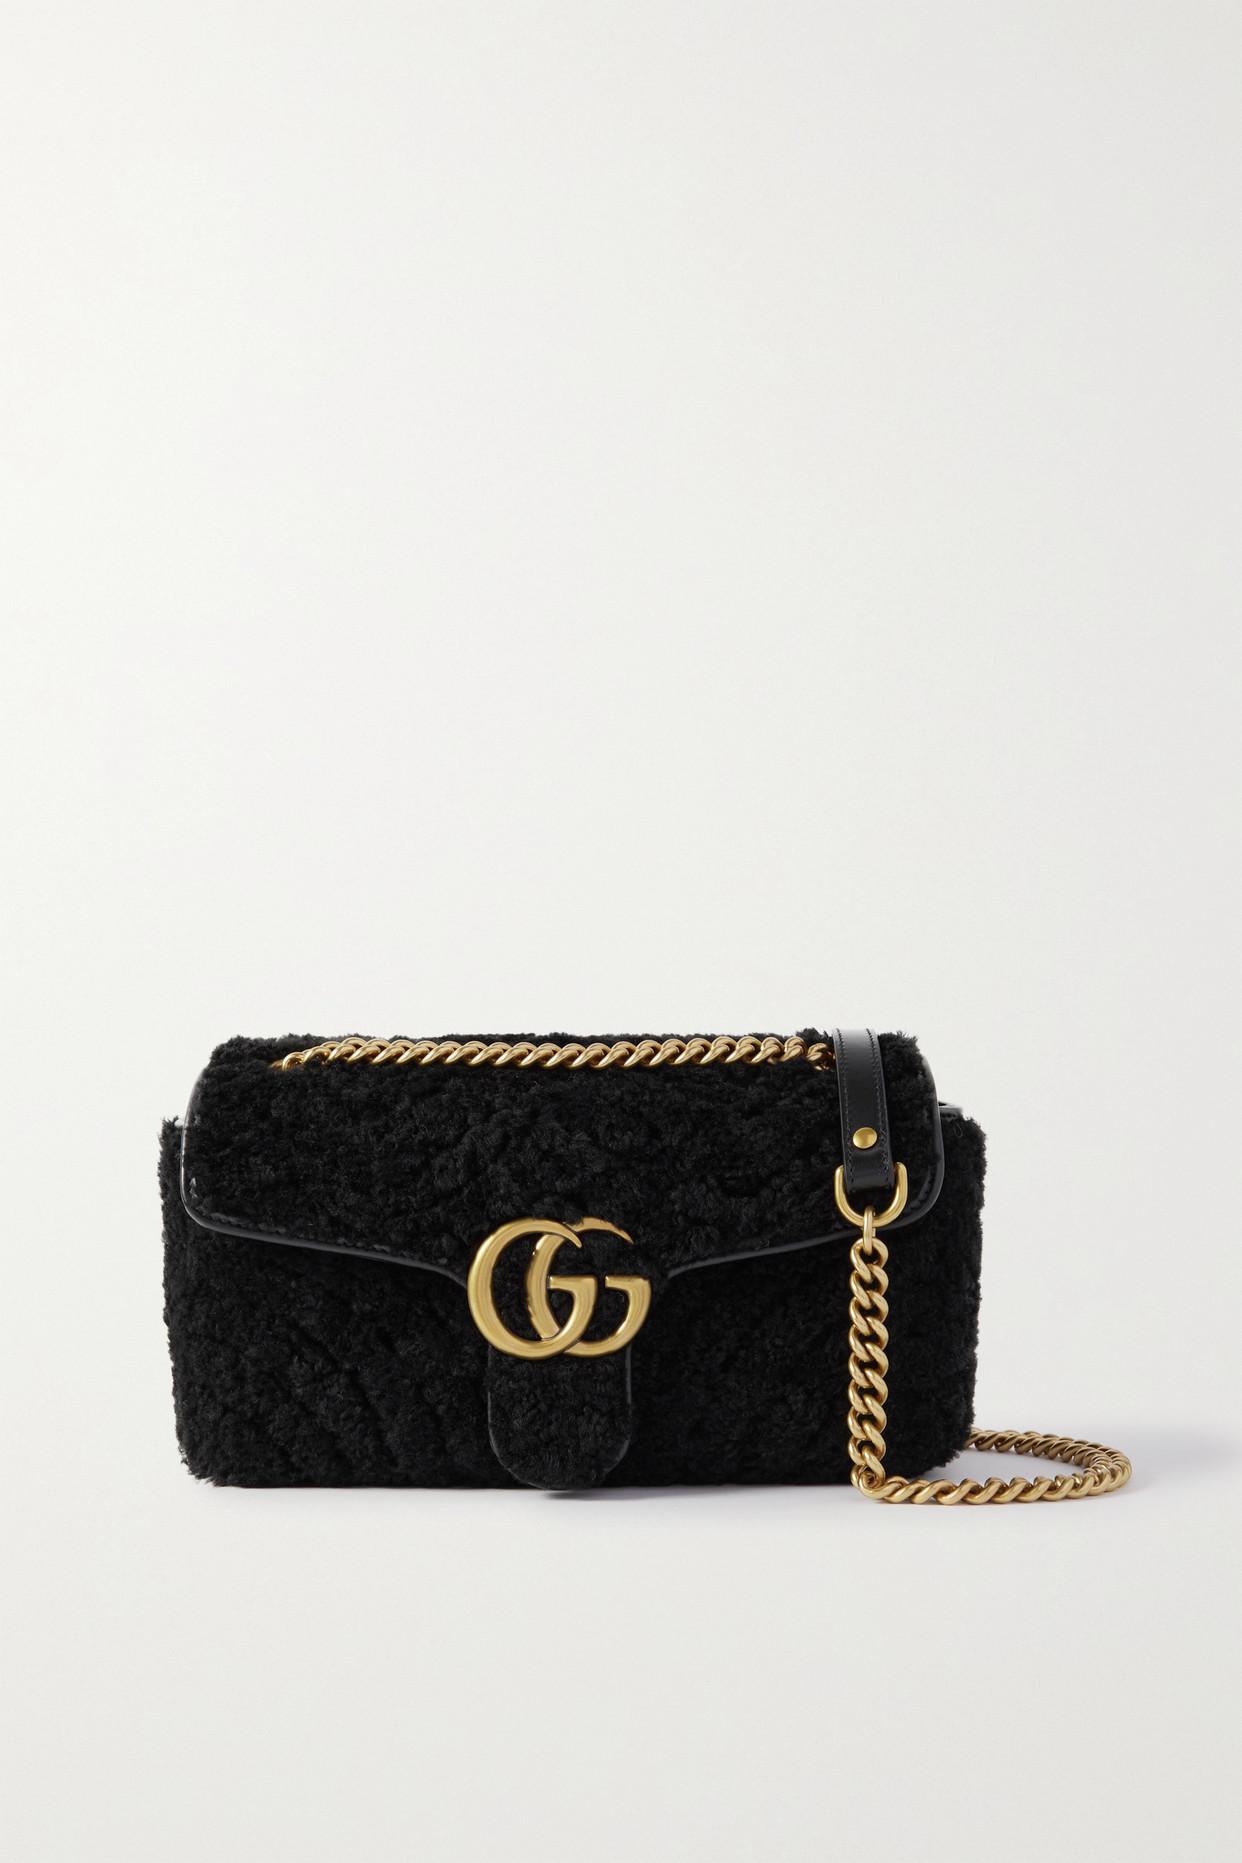 Gucci Gg Marmont 2.0 Leather-trimmed Matelassé Shearling Shoulder Bag in  Black | Lyst